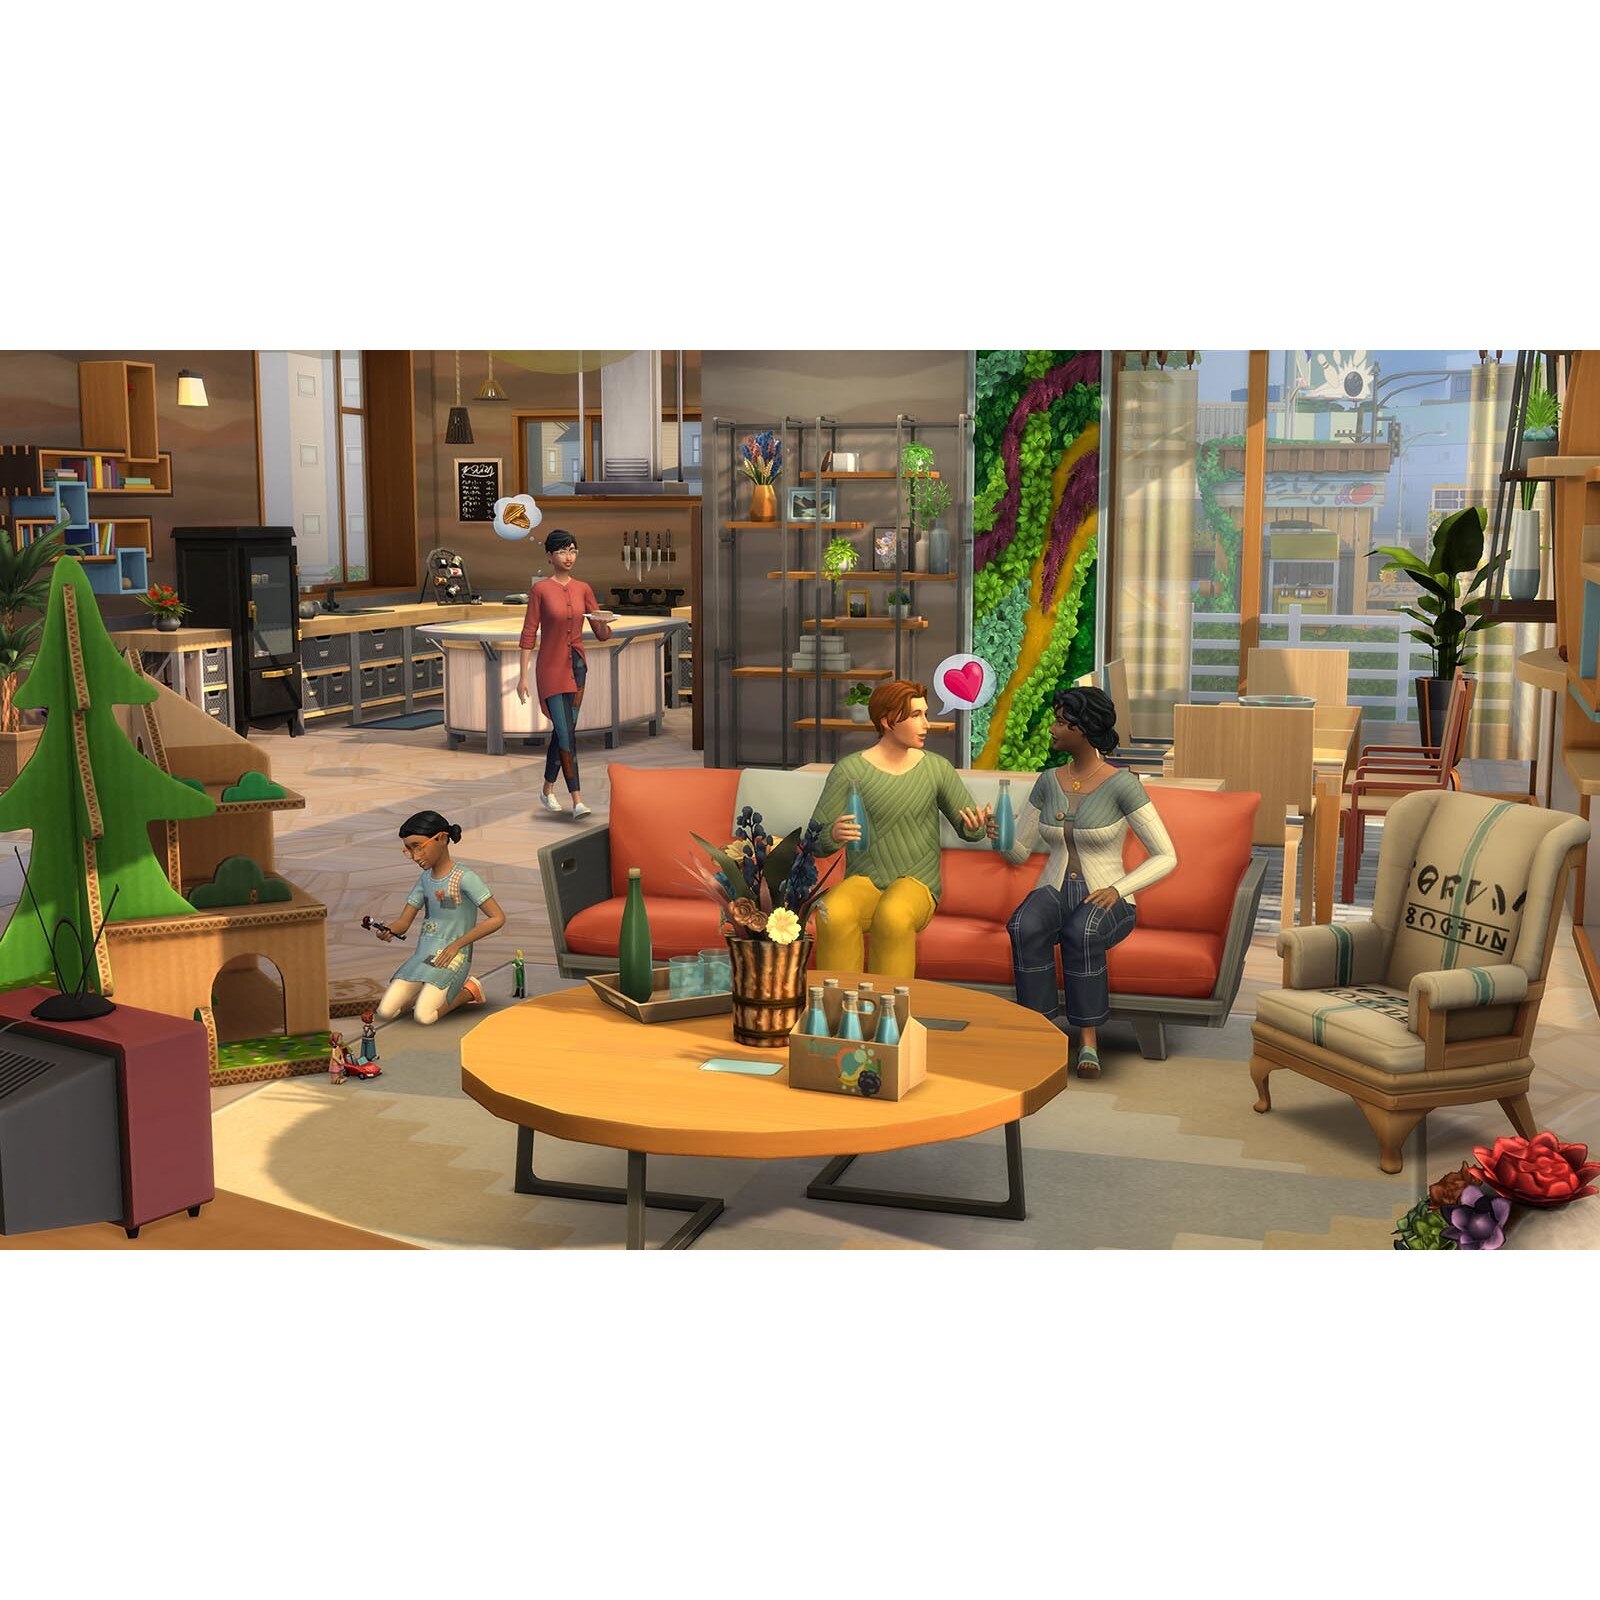 The Sims 4 - Moschino Stuff DLC Origin CD Key